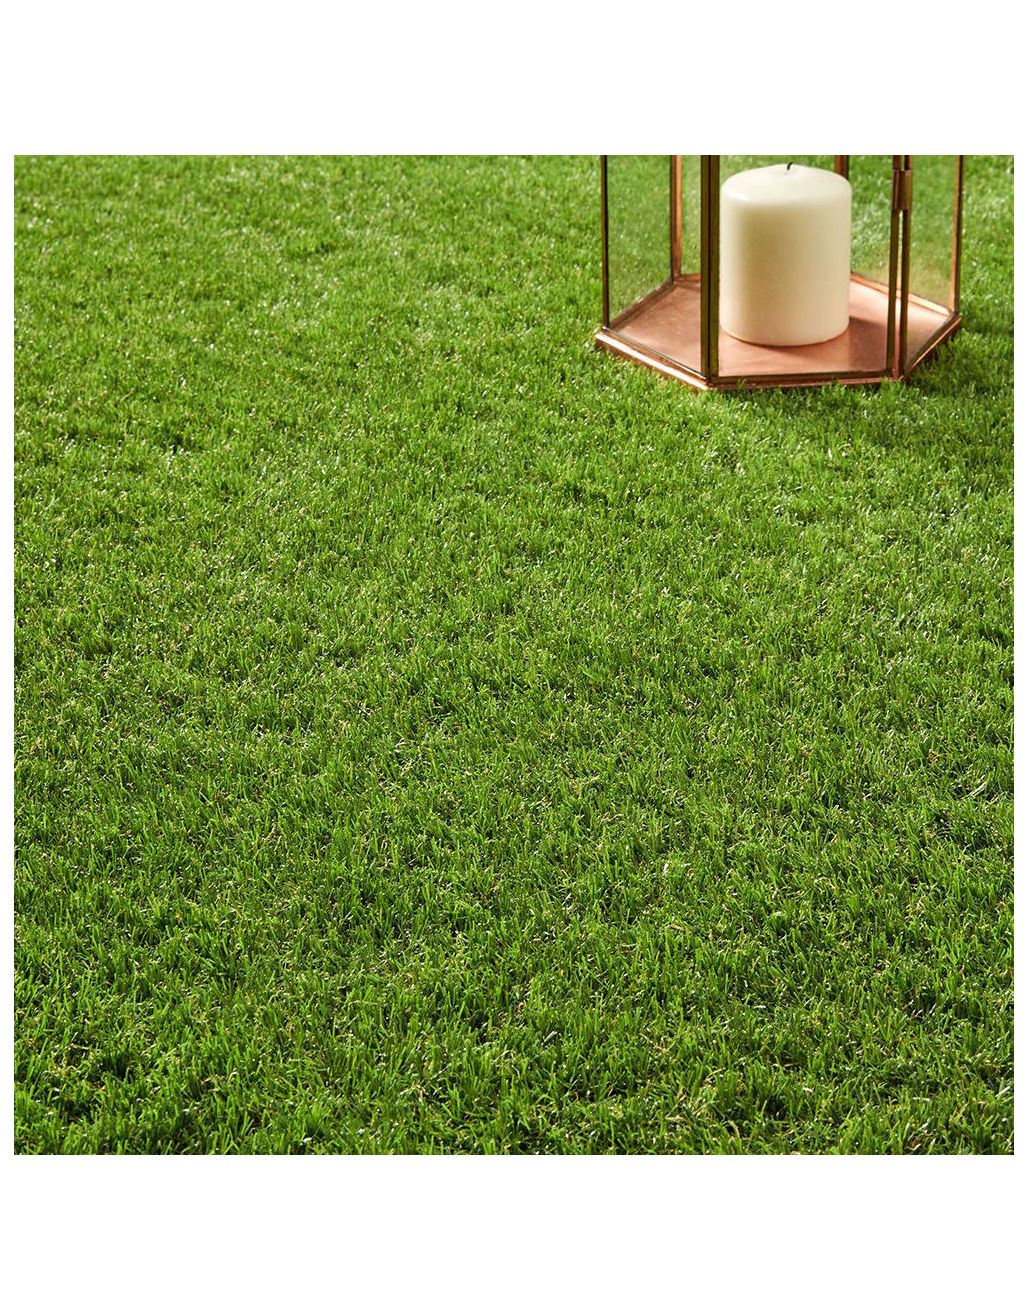 Real Garden Lawn Grass Rolls 48 sq Fresh High Quality Turf Metres 